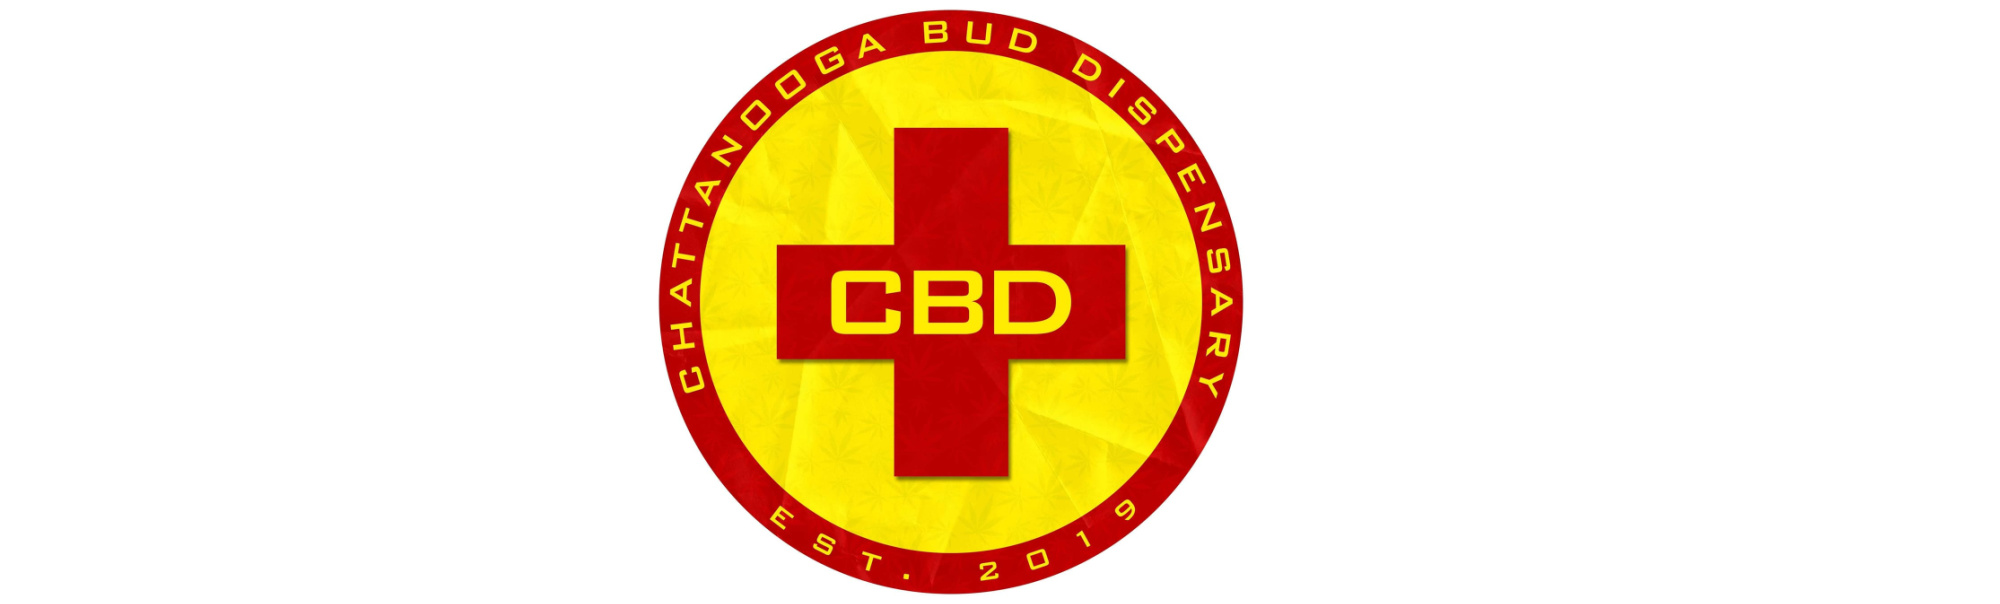 image of cbd chattanooga bud dispensary in tn